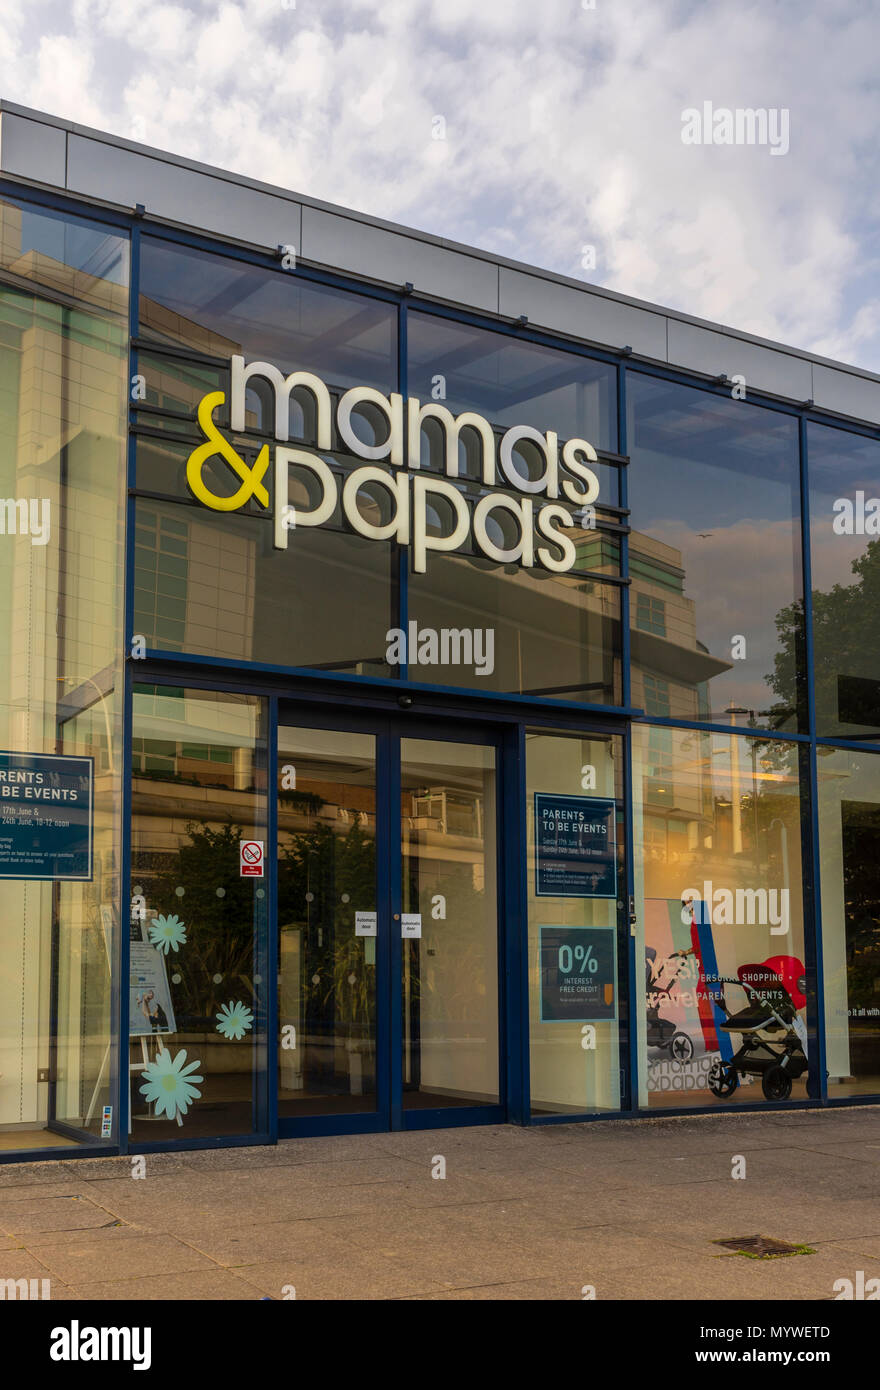 Shop facade of a Mamas and Papas retail store in Southampton, UK Stock Photo